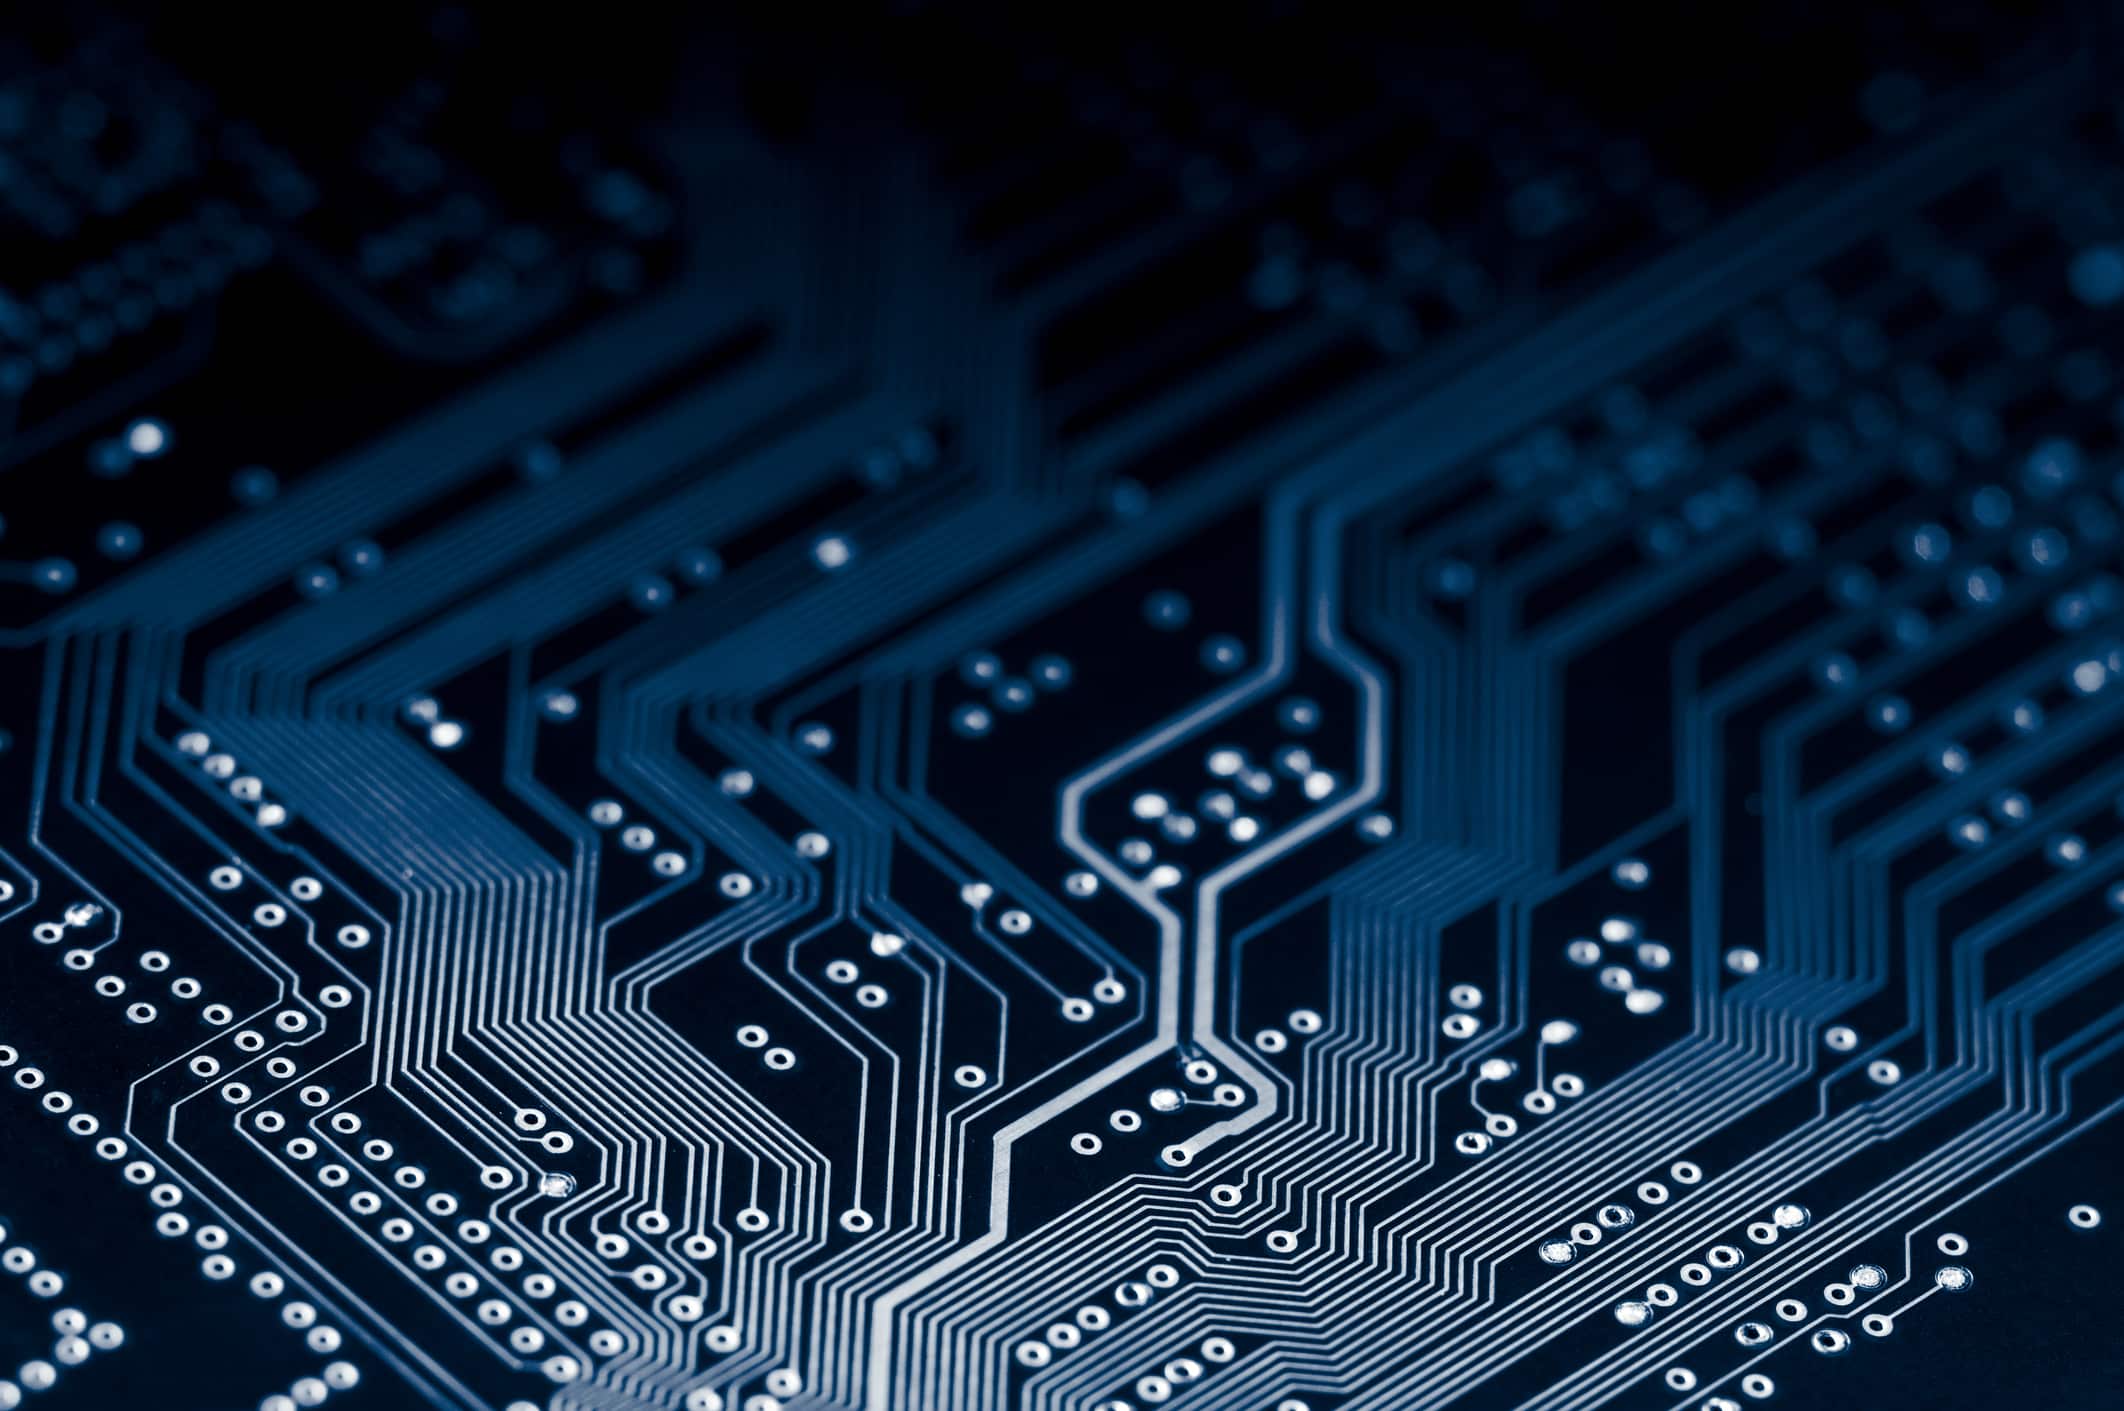 Macro shot of electronic circuit board representing modern technology.